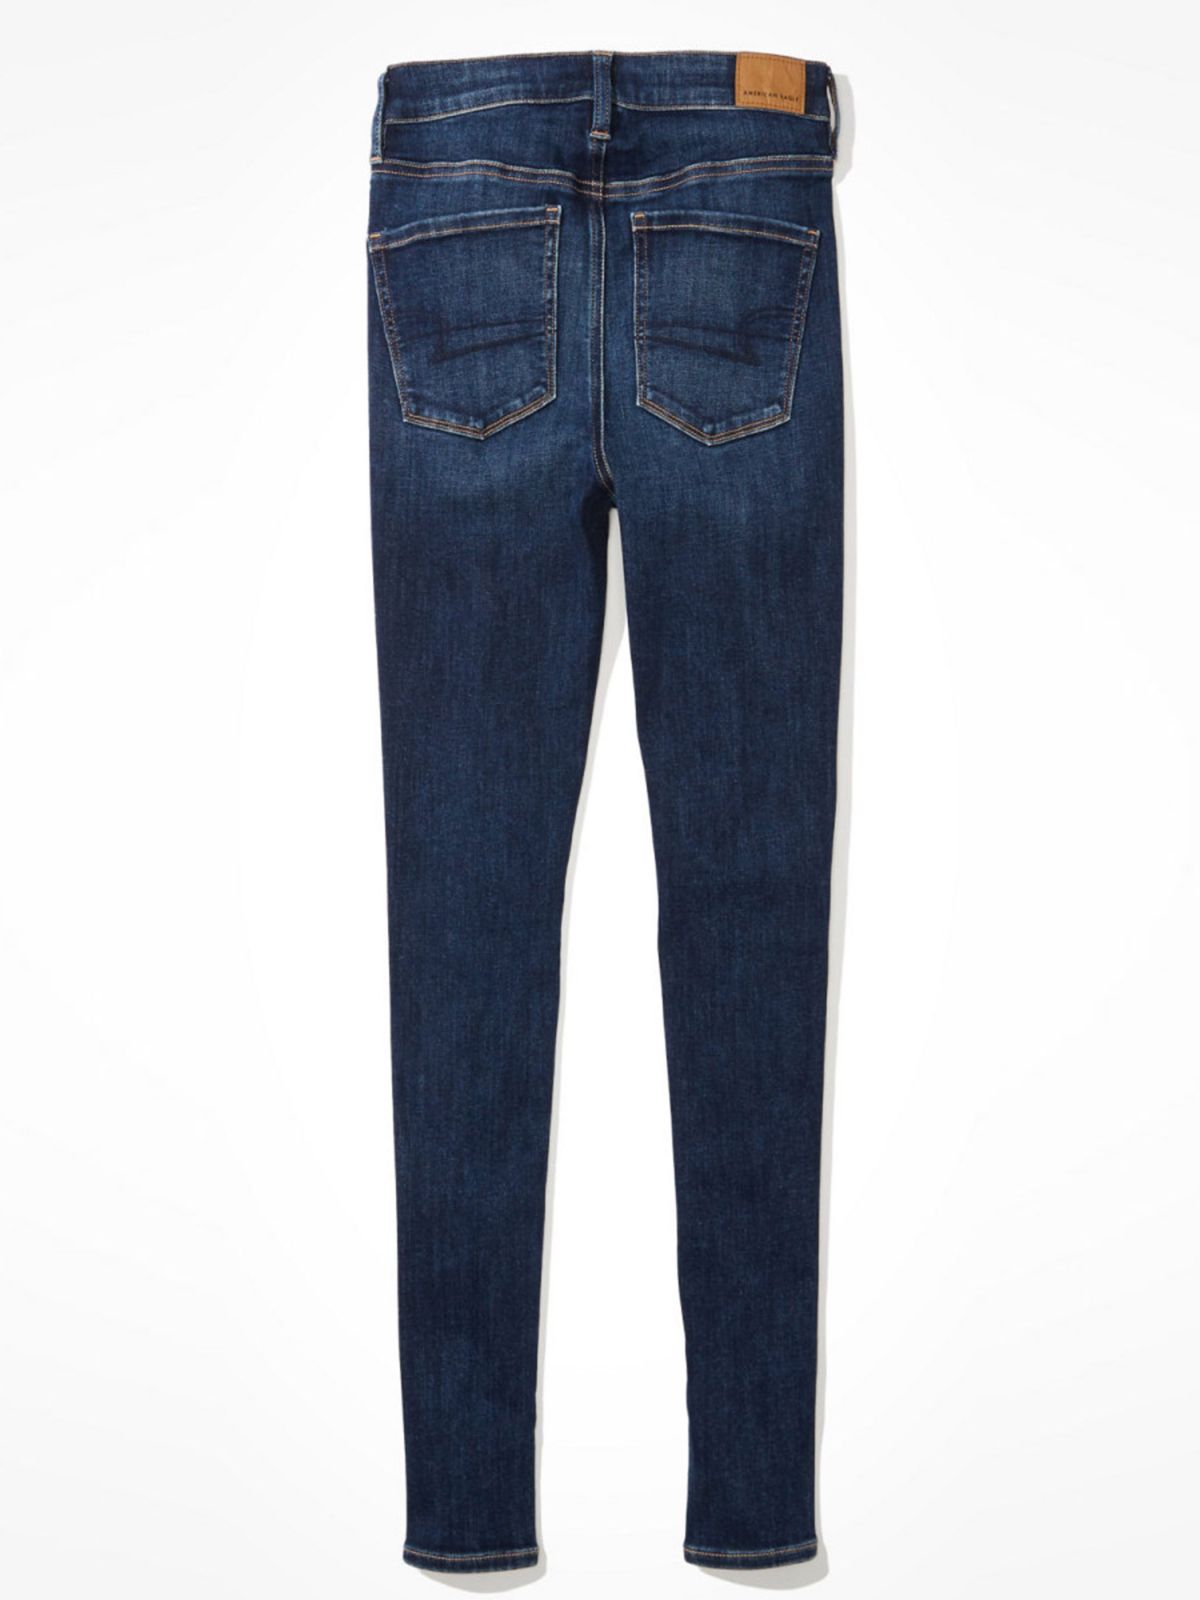  ג'ינס סקיני בגזרה גבוהה Super Hi-Rise Jegging של AMERICAN EAGLE